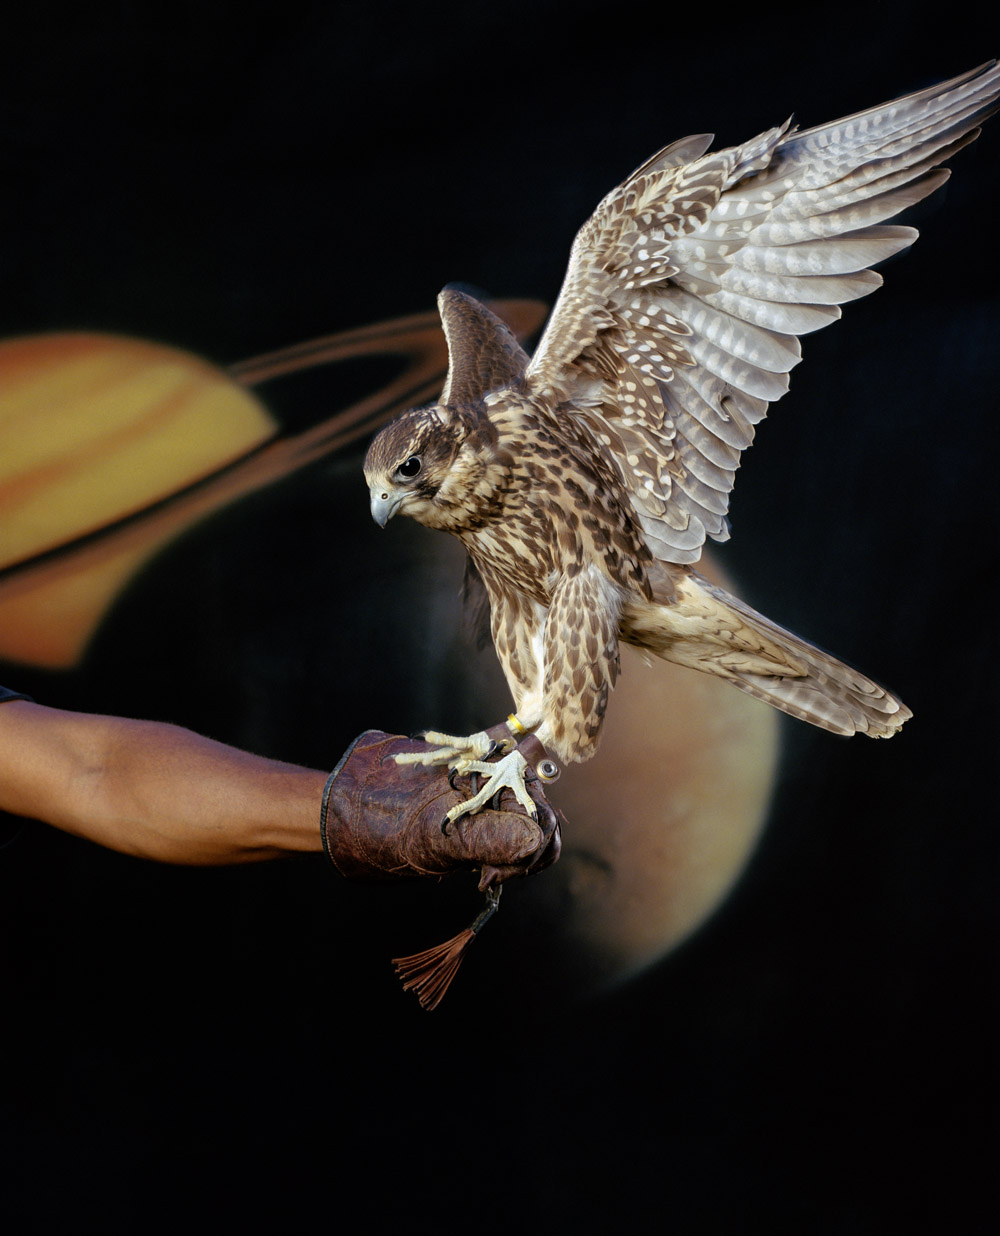 A man holding a falcon, by Awol Erizku